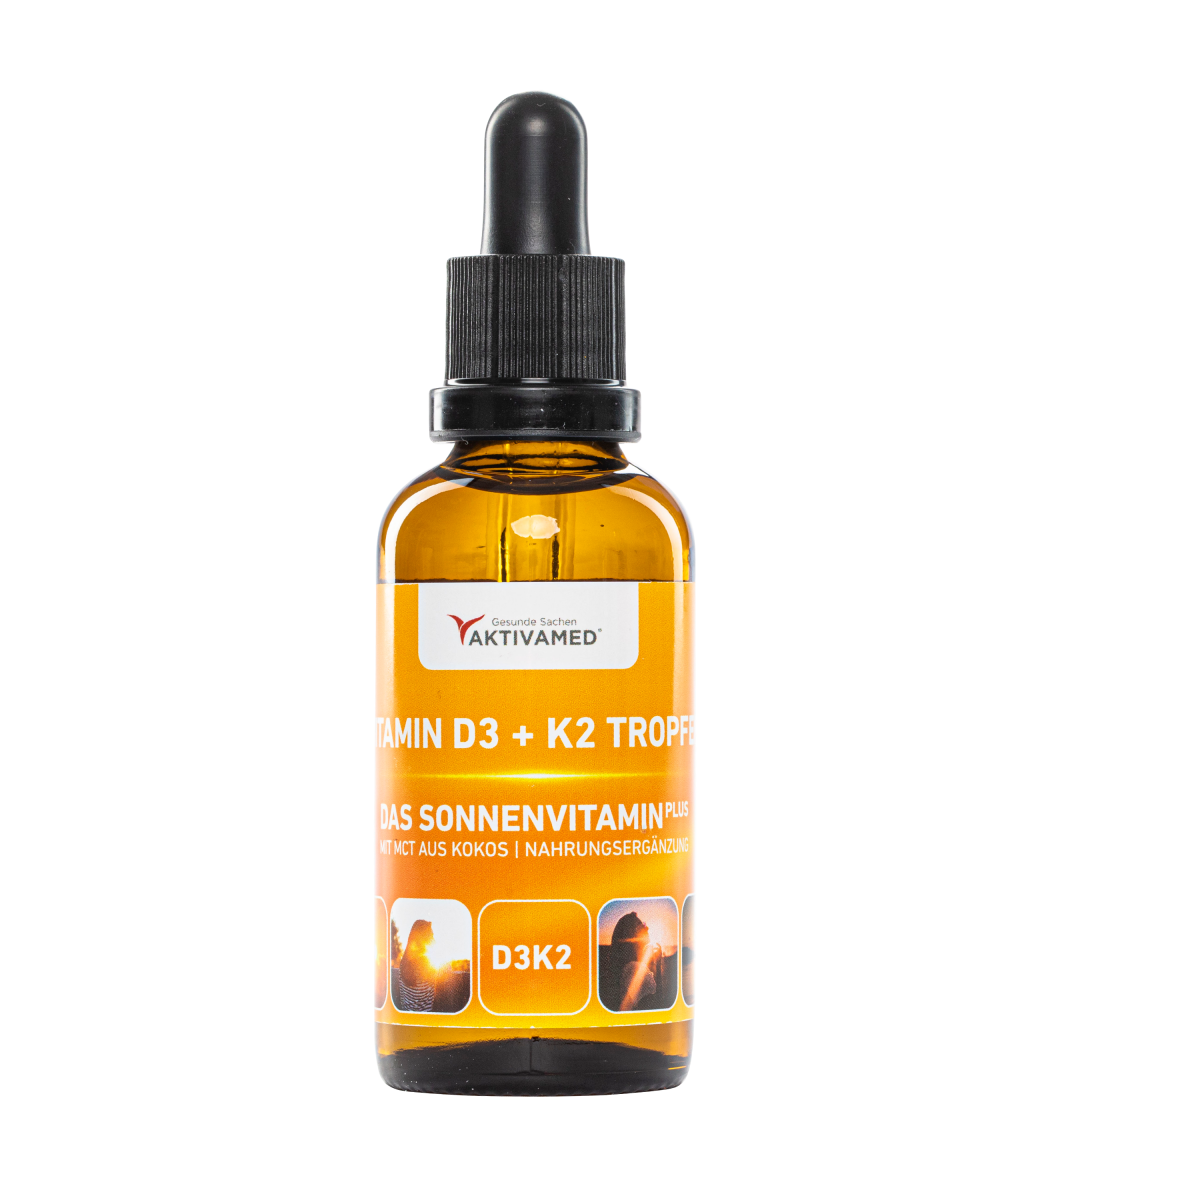 Vitamin D3 + K2 Tropfen 50ml mit hochqualitativem K2 - Aktionspreis!